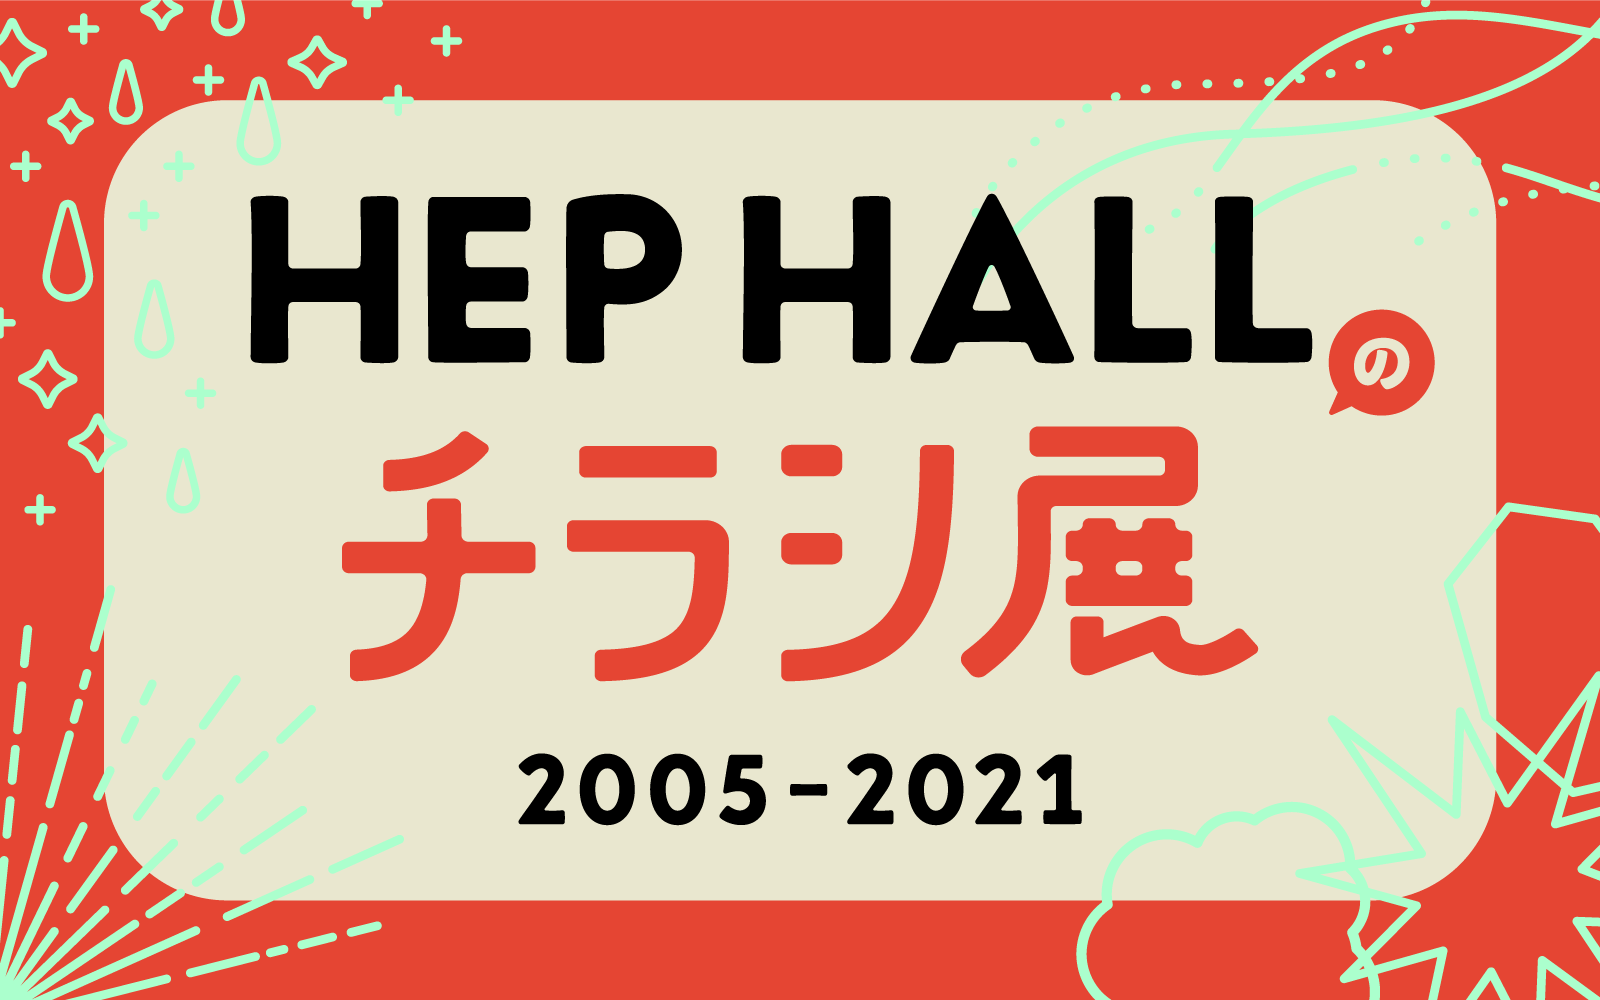 Hep Hallの思い出 05 21 Hep Hall Archives